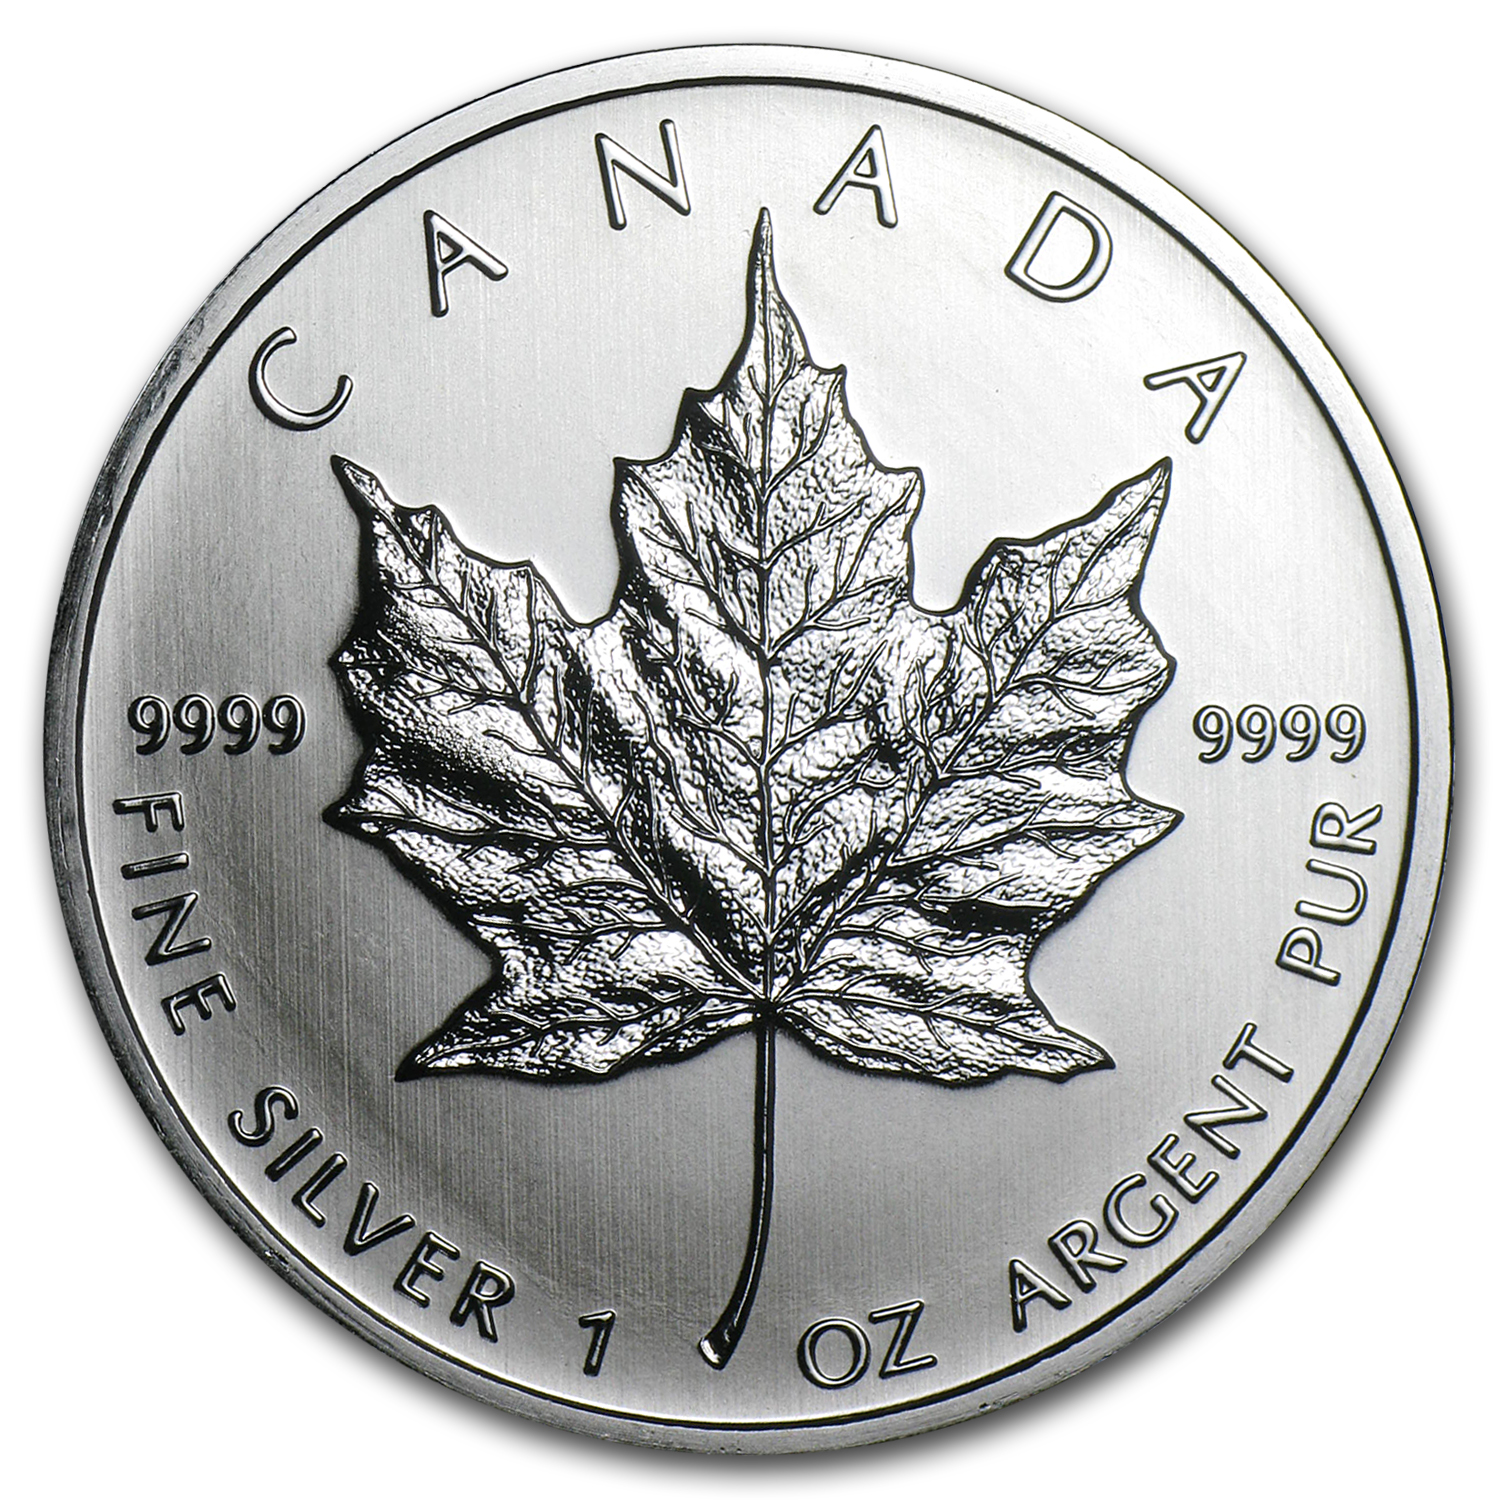 2002 BU 1 oz Canadian Silver Maple Leaf Coin Mint-Sealed Low-Mintage Year 